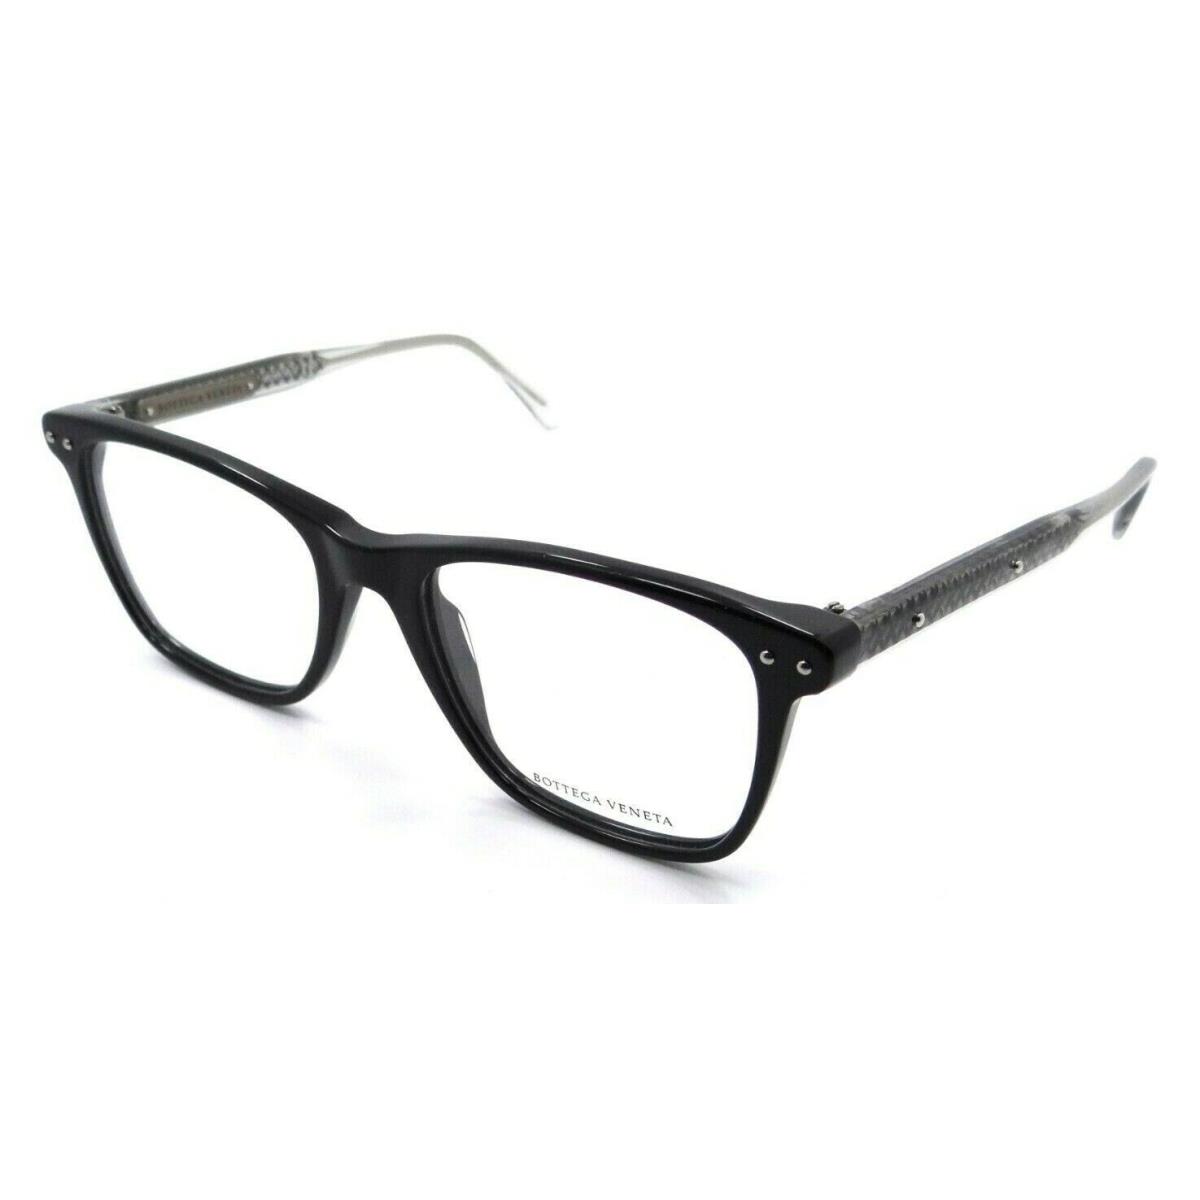 Bottega Veneta Eyeglasses Frames BV0099O 004 51-18-145 Black / Silver Italy